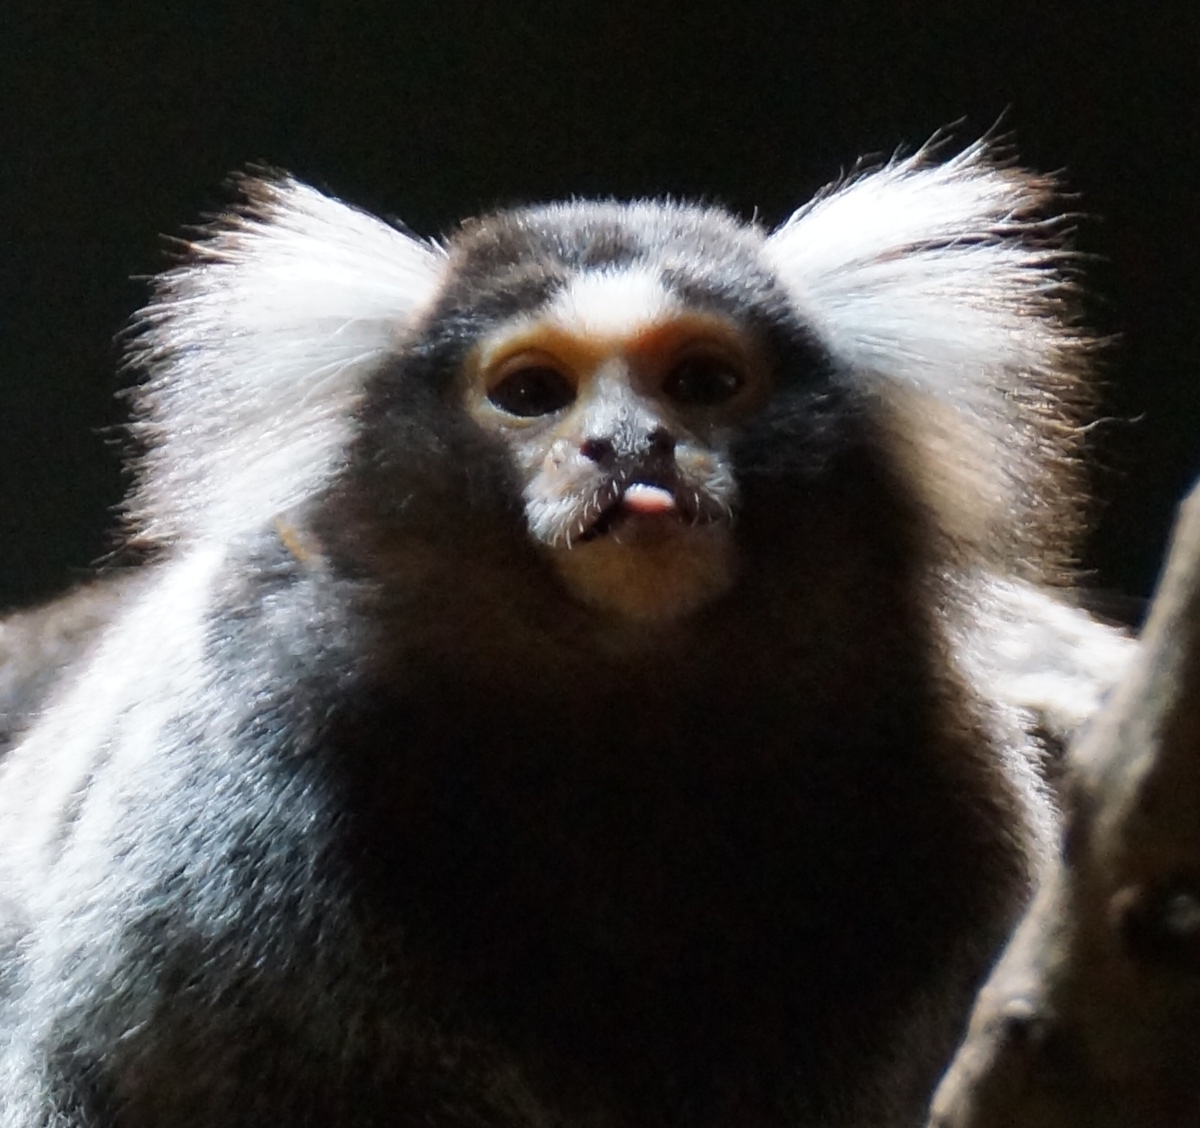 Monkey sticking tongue out